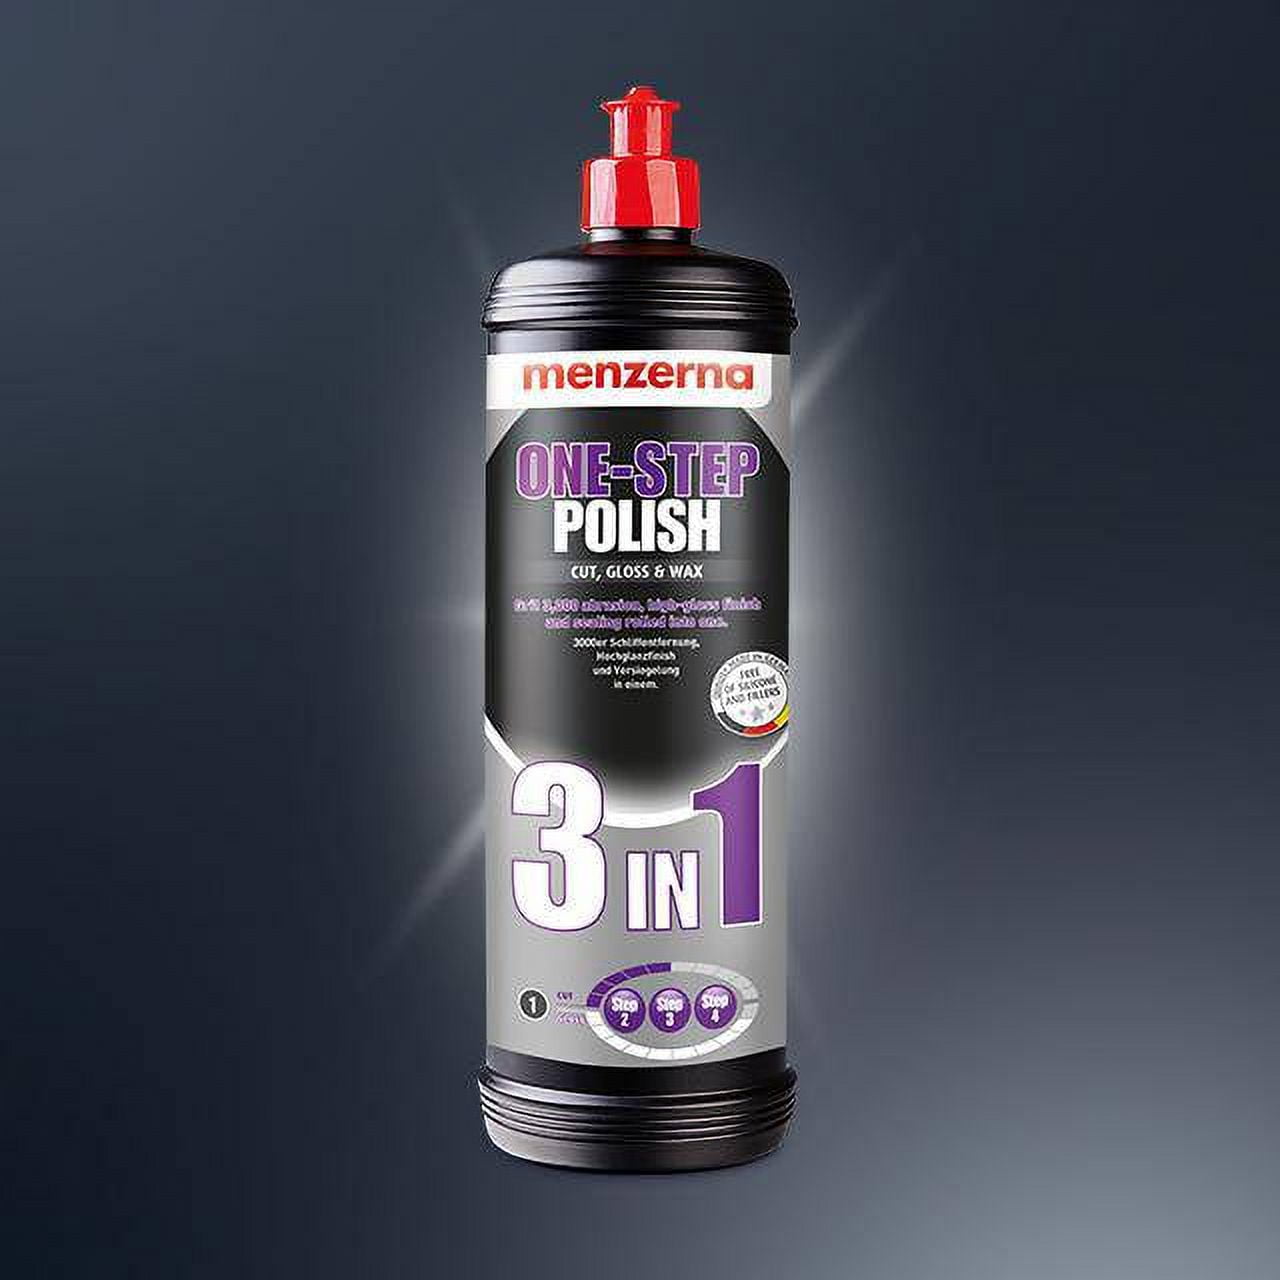 Gtechniq - C2v3 Liquid Crystal Revolutionary Easy Spray-On Polish